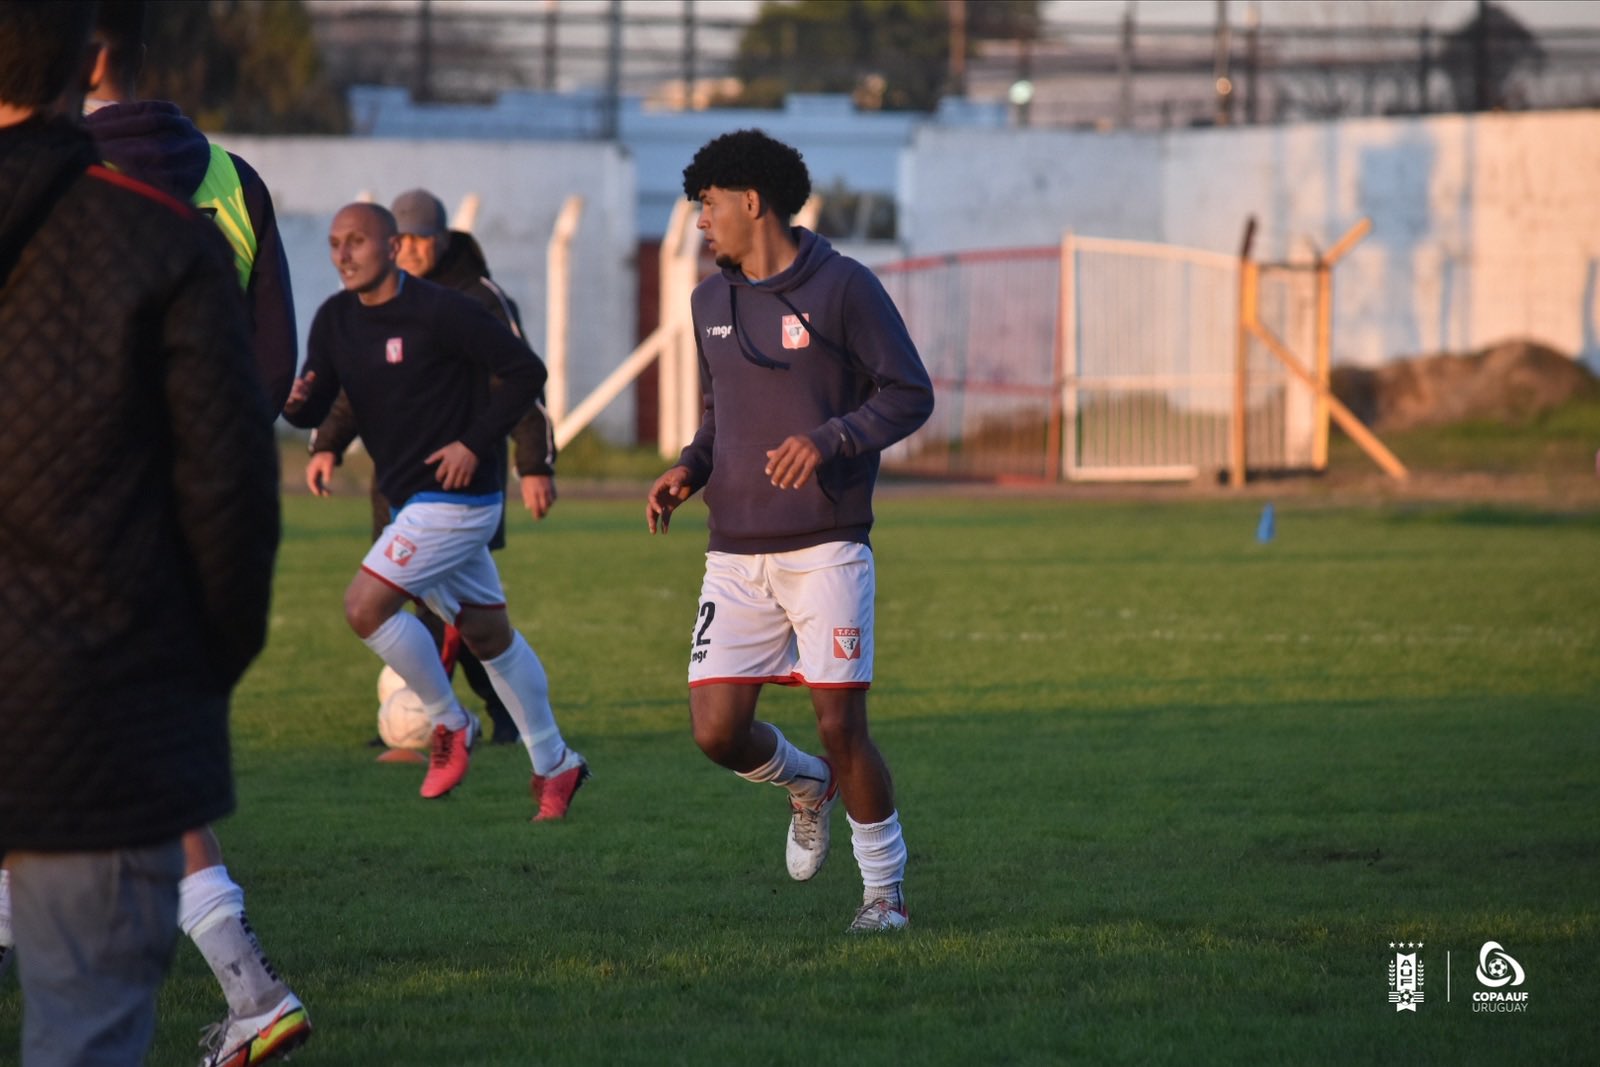 Continúa la Copa Uruguay, Juventud eliminó a Alto Perú